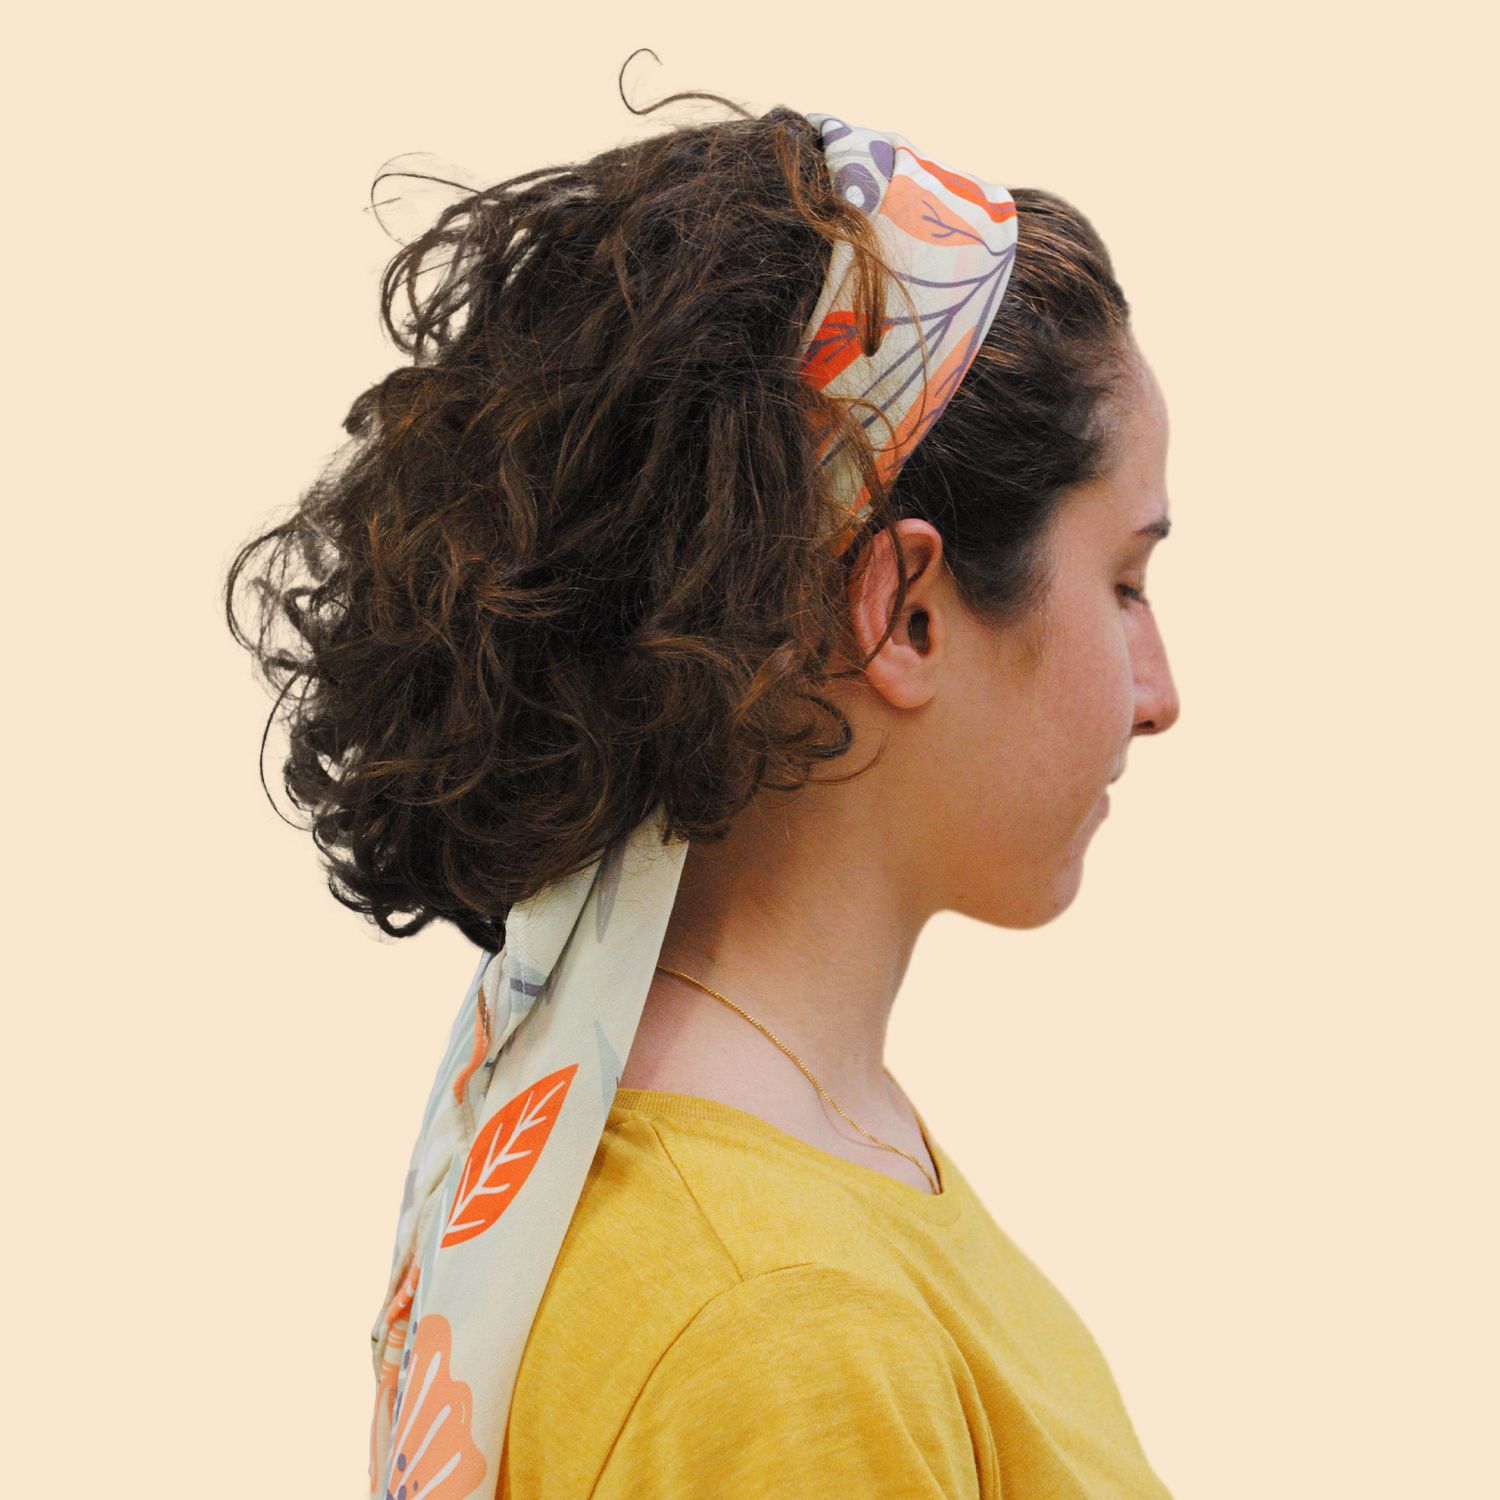 foulard indossato come fascia